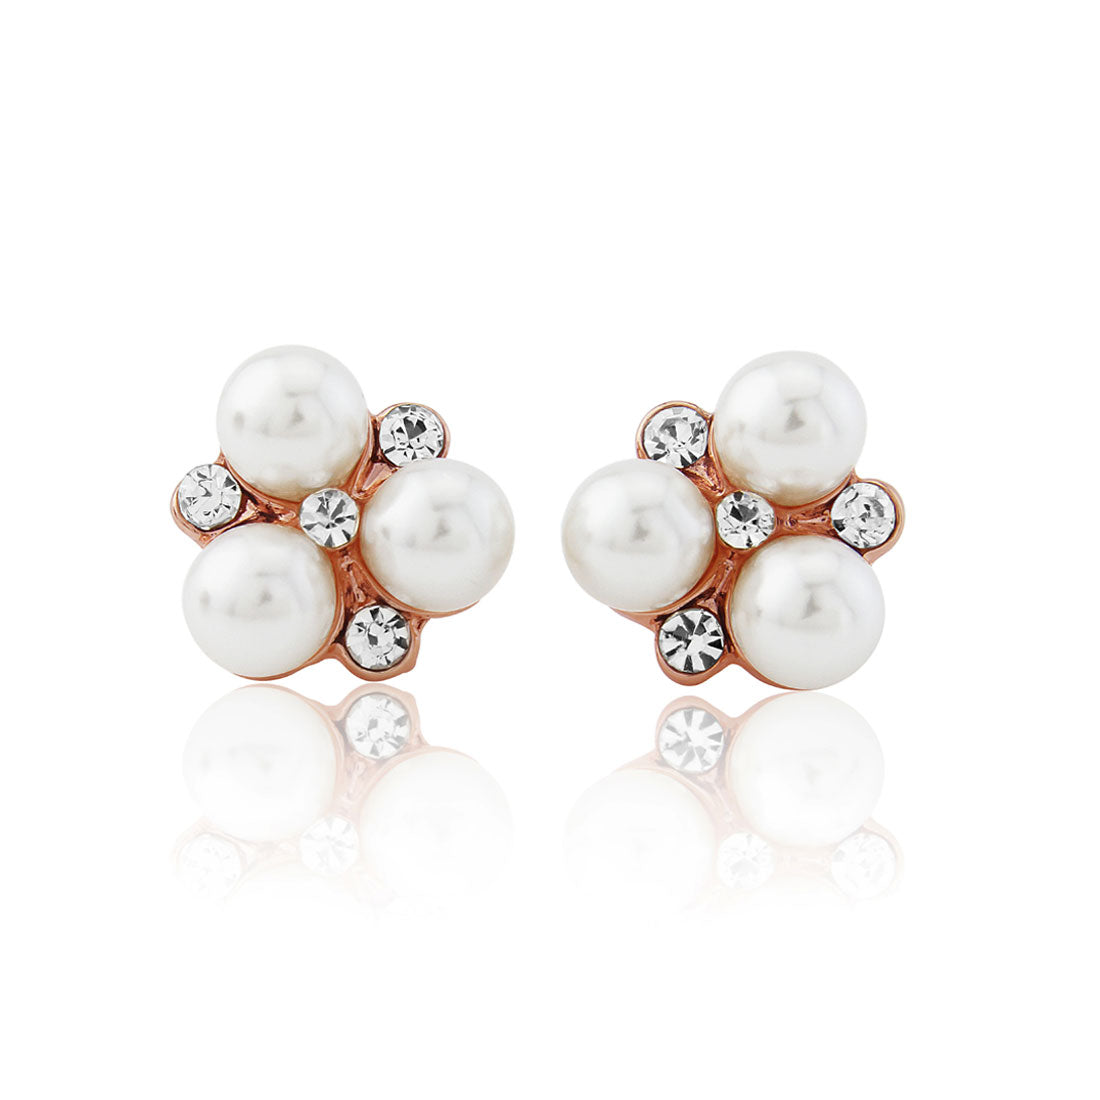 Shimmer of Rose Gold Crystal & Pearl Cluster Wedding Stud Earrings